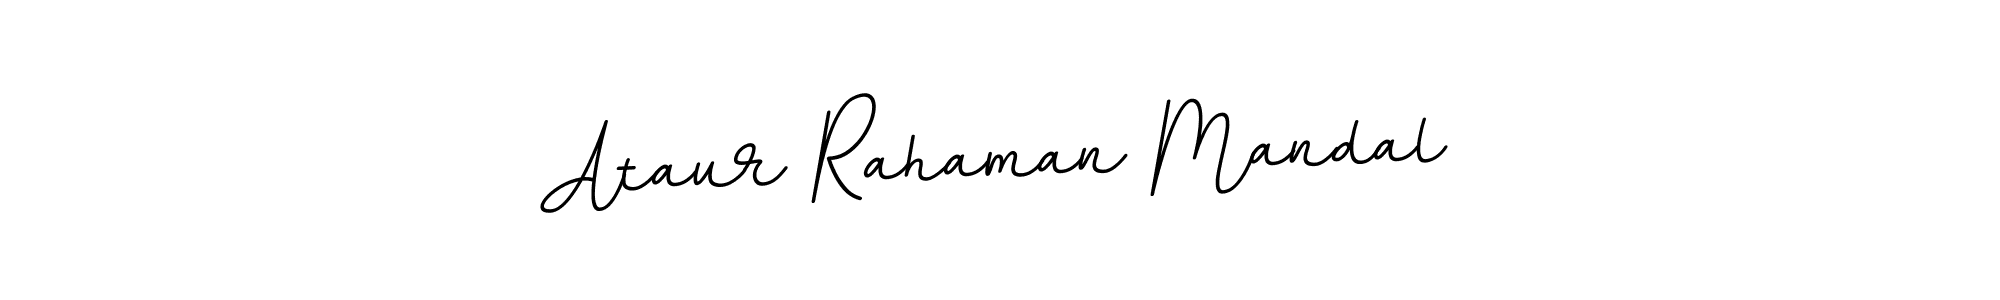 How to Draw Ataur Rahaman Mandal signature style? BallpointsItalic-DORy9 is a latest design signature styles for name Ataur Rahaman Mandal. Ataur Rahaman Mandal signature style 11 images and pictures png